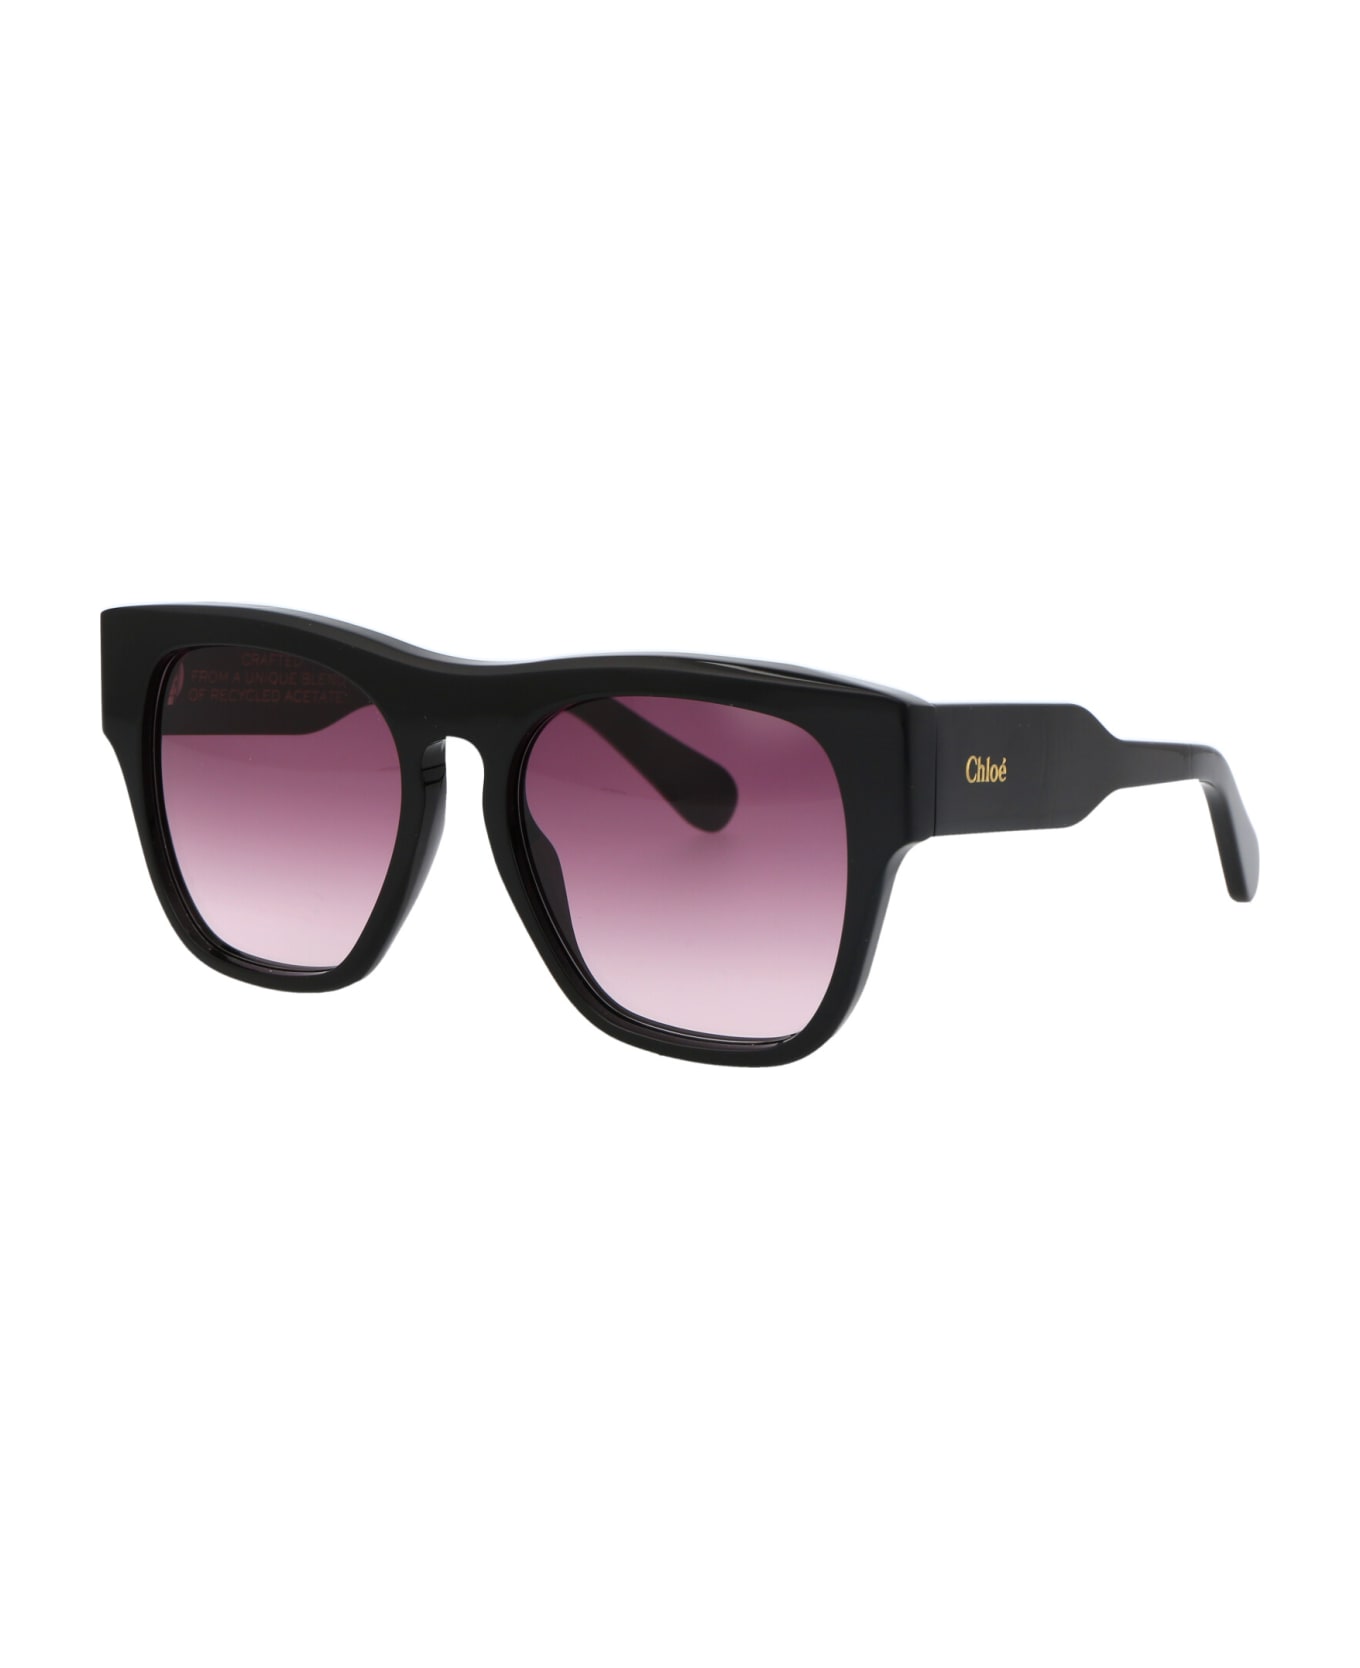 Chloé Eyewear Ch0149s Sunglasses - 001 BLACK BLACK RED